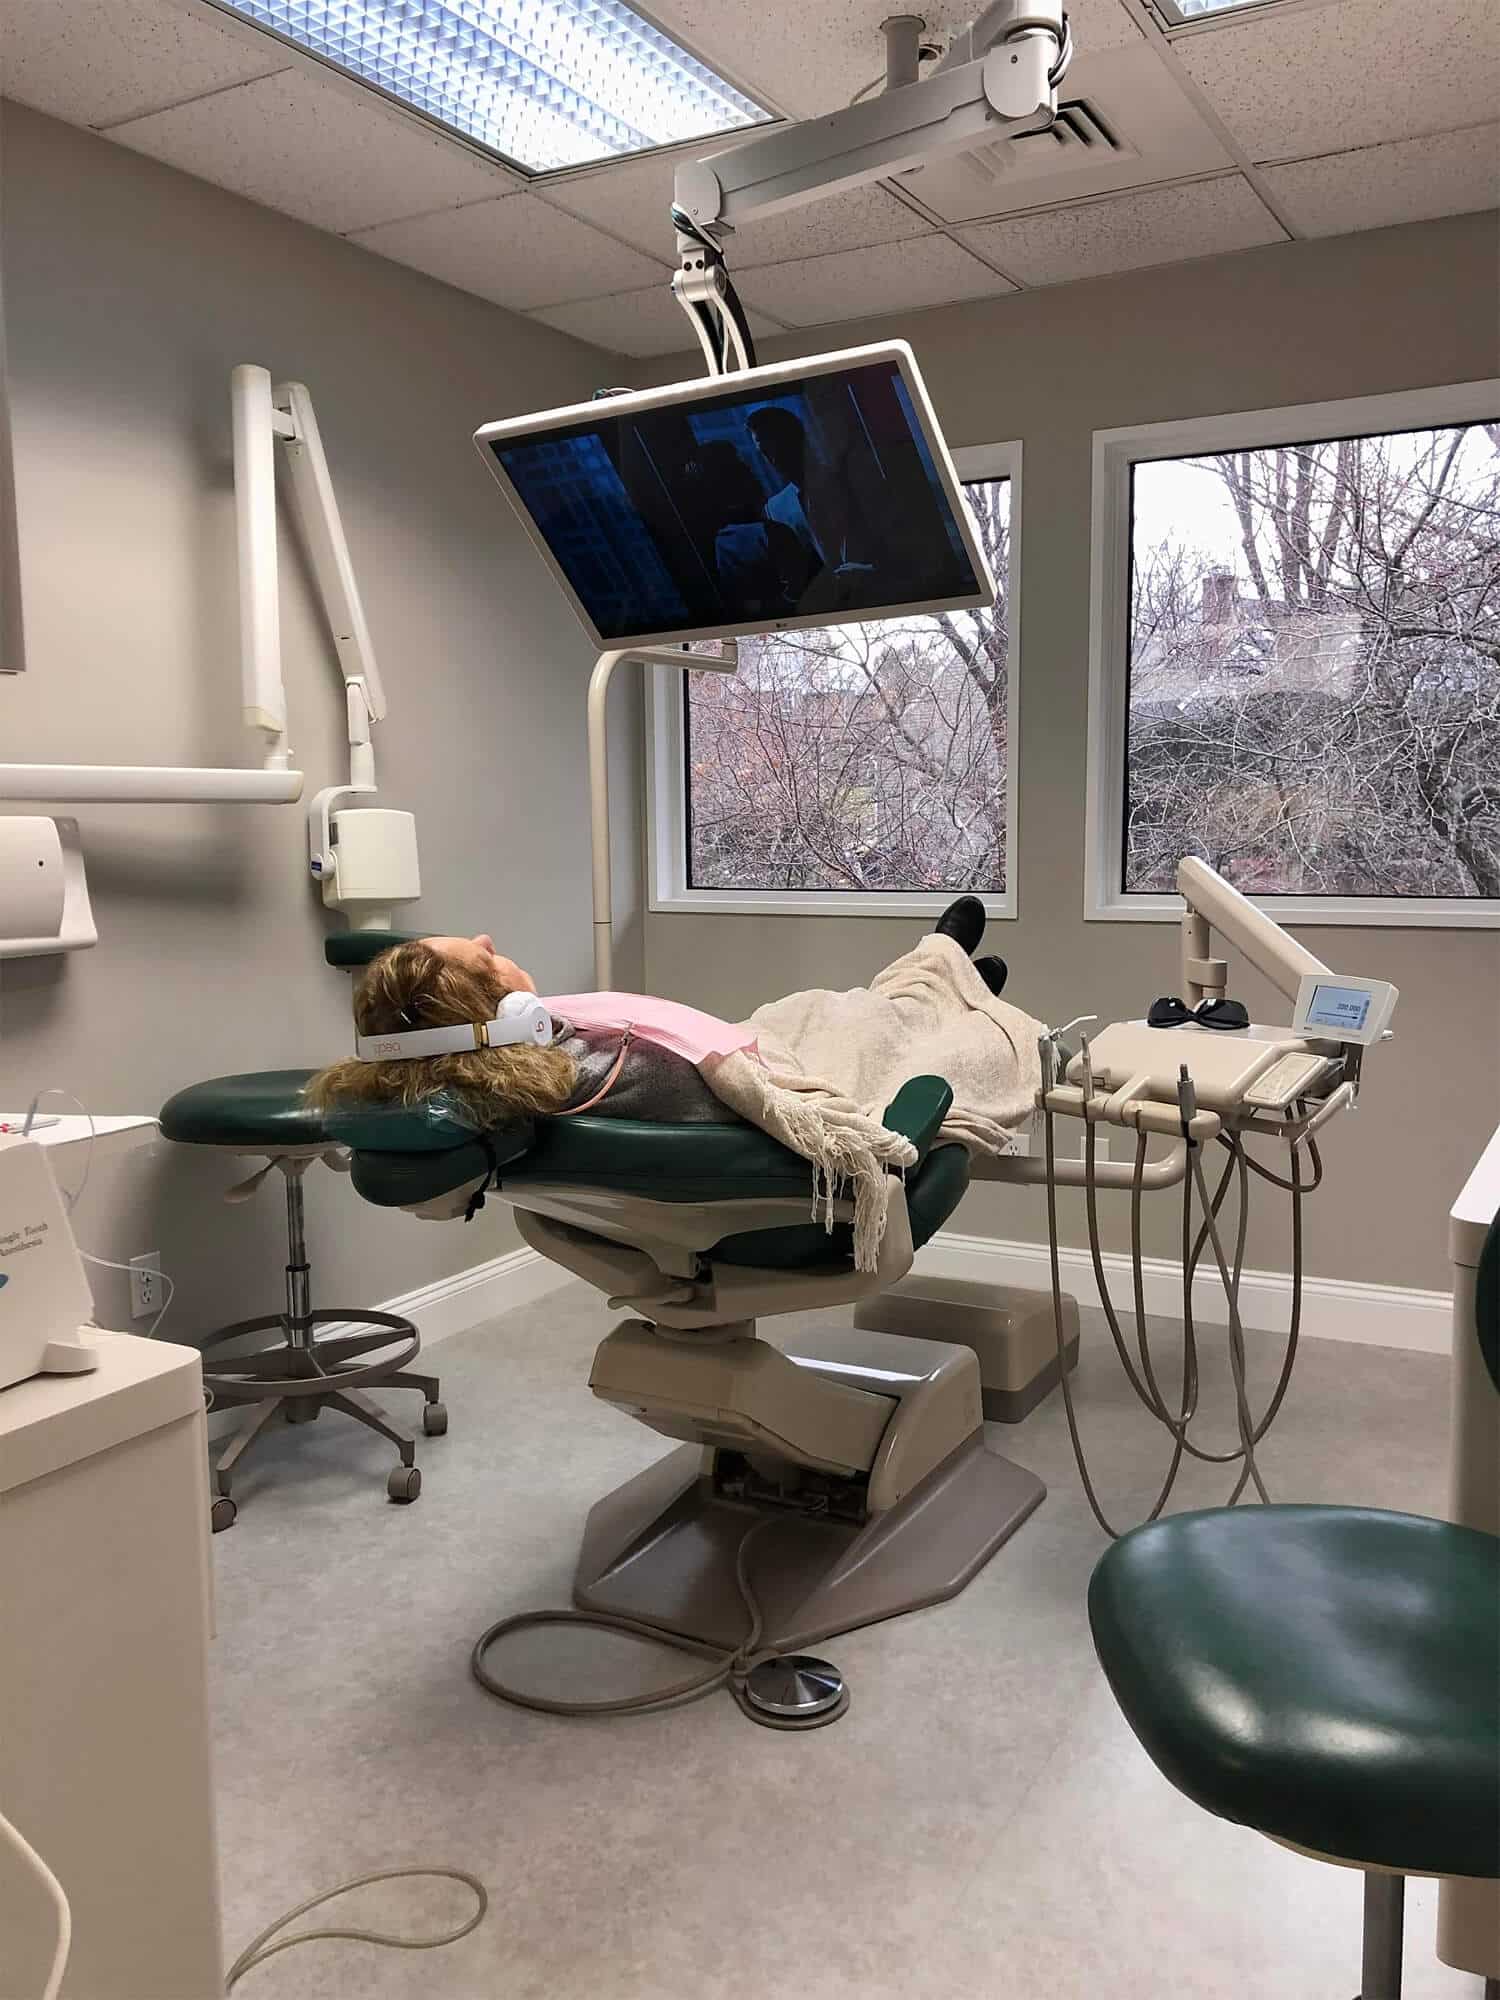 Sedation Dentistry In Allentown Pa Sedation Dentistry Specialist In Pa